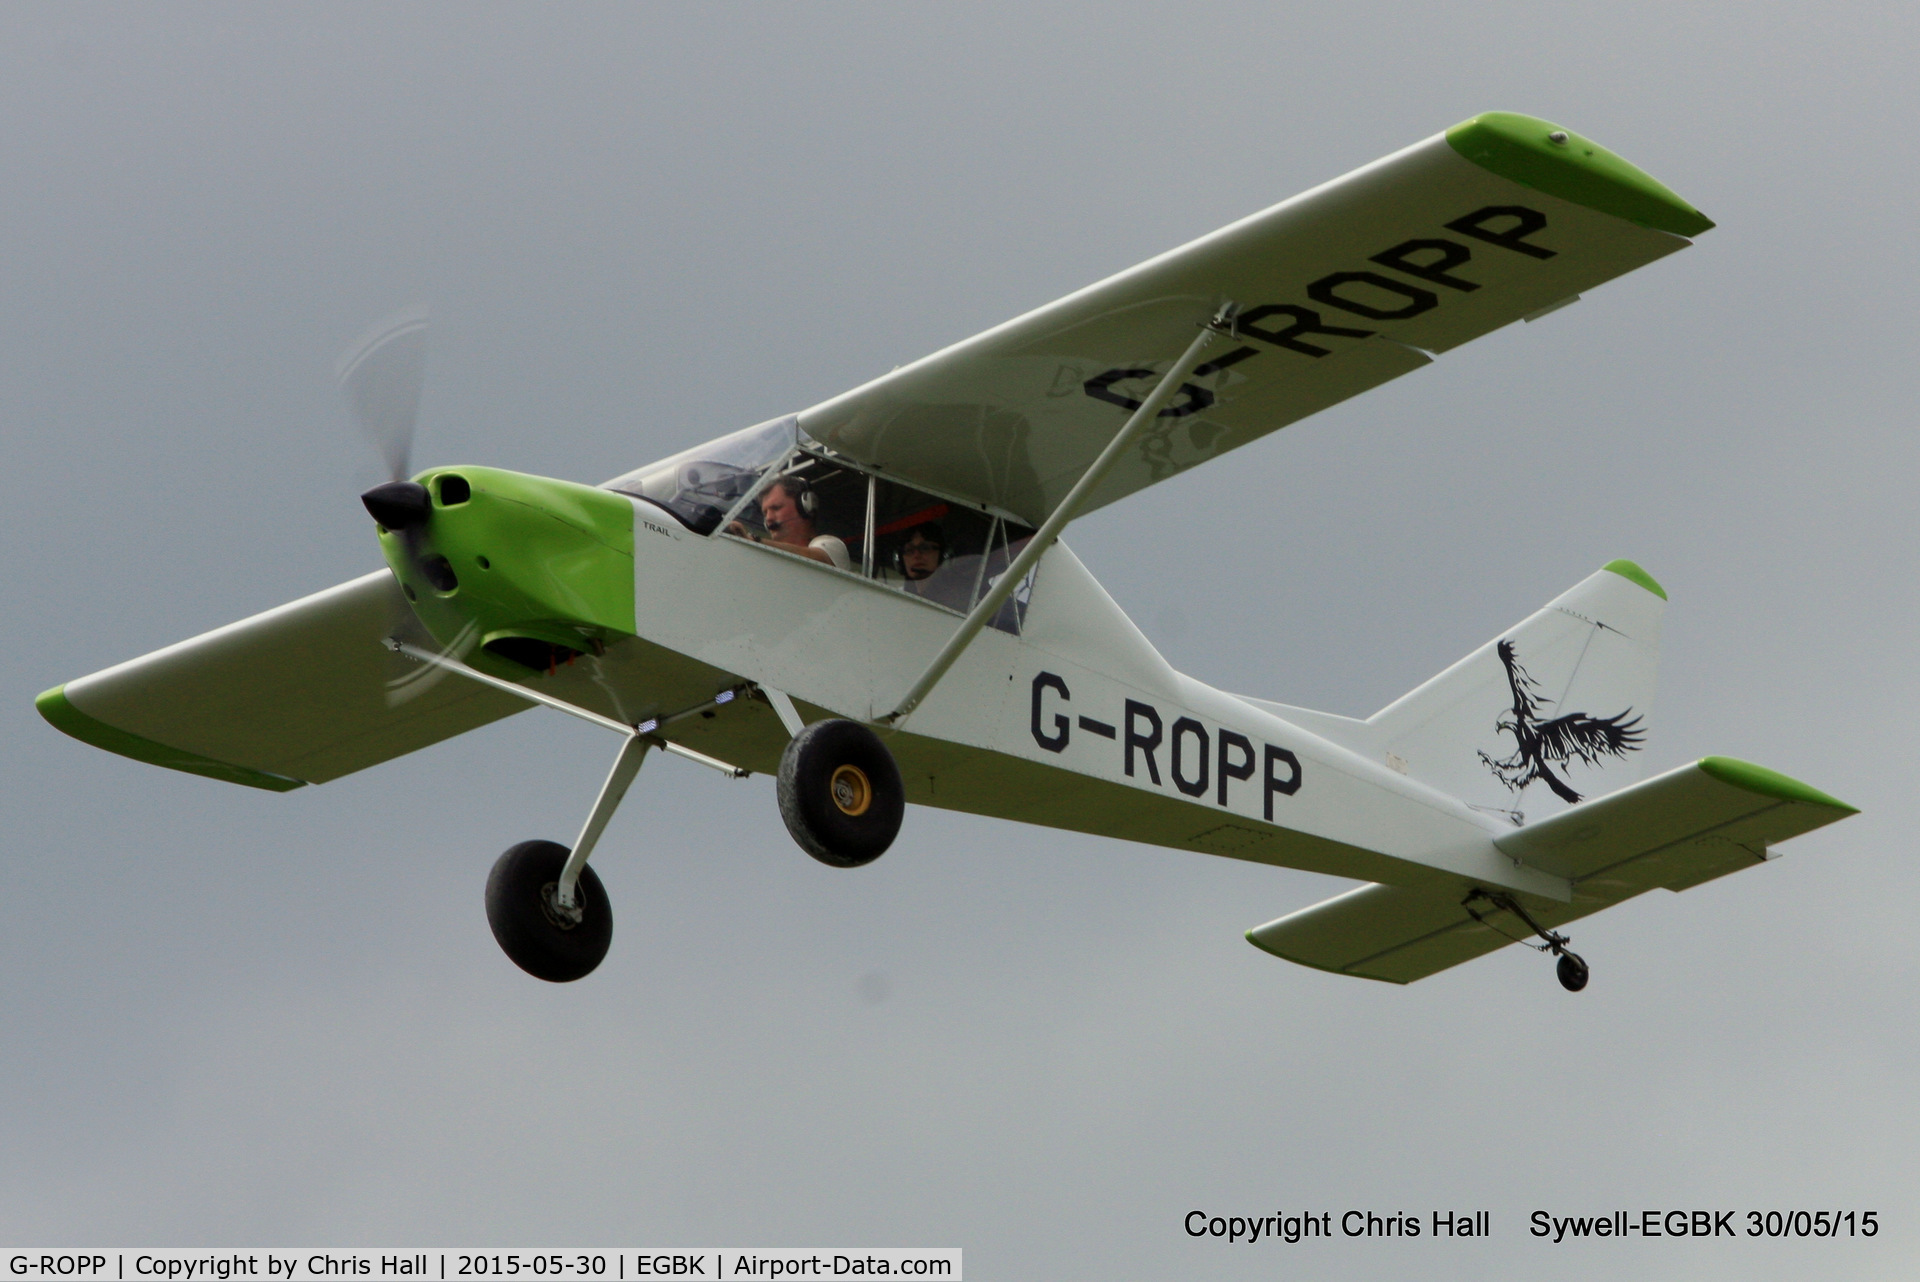 G-ROPP, 2012 Nando Groppo Trial C/N LAA 372-15178, at Aeroexpo 2015